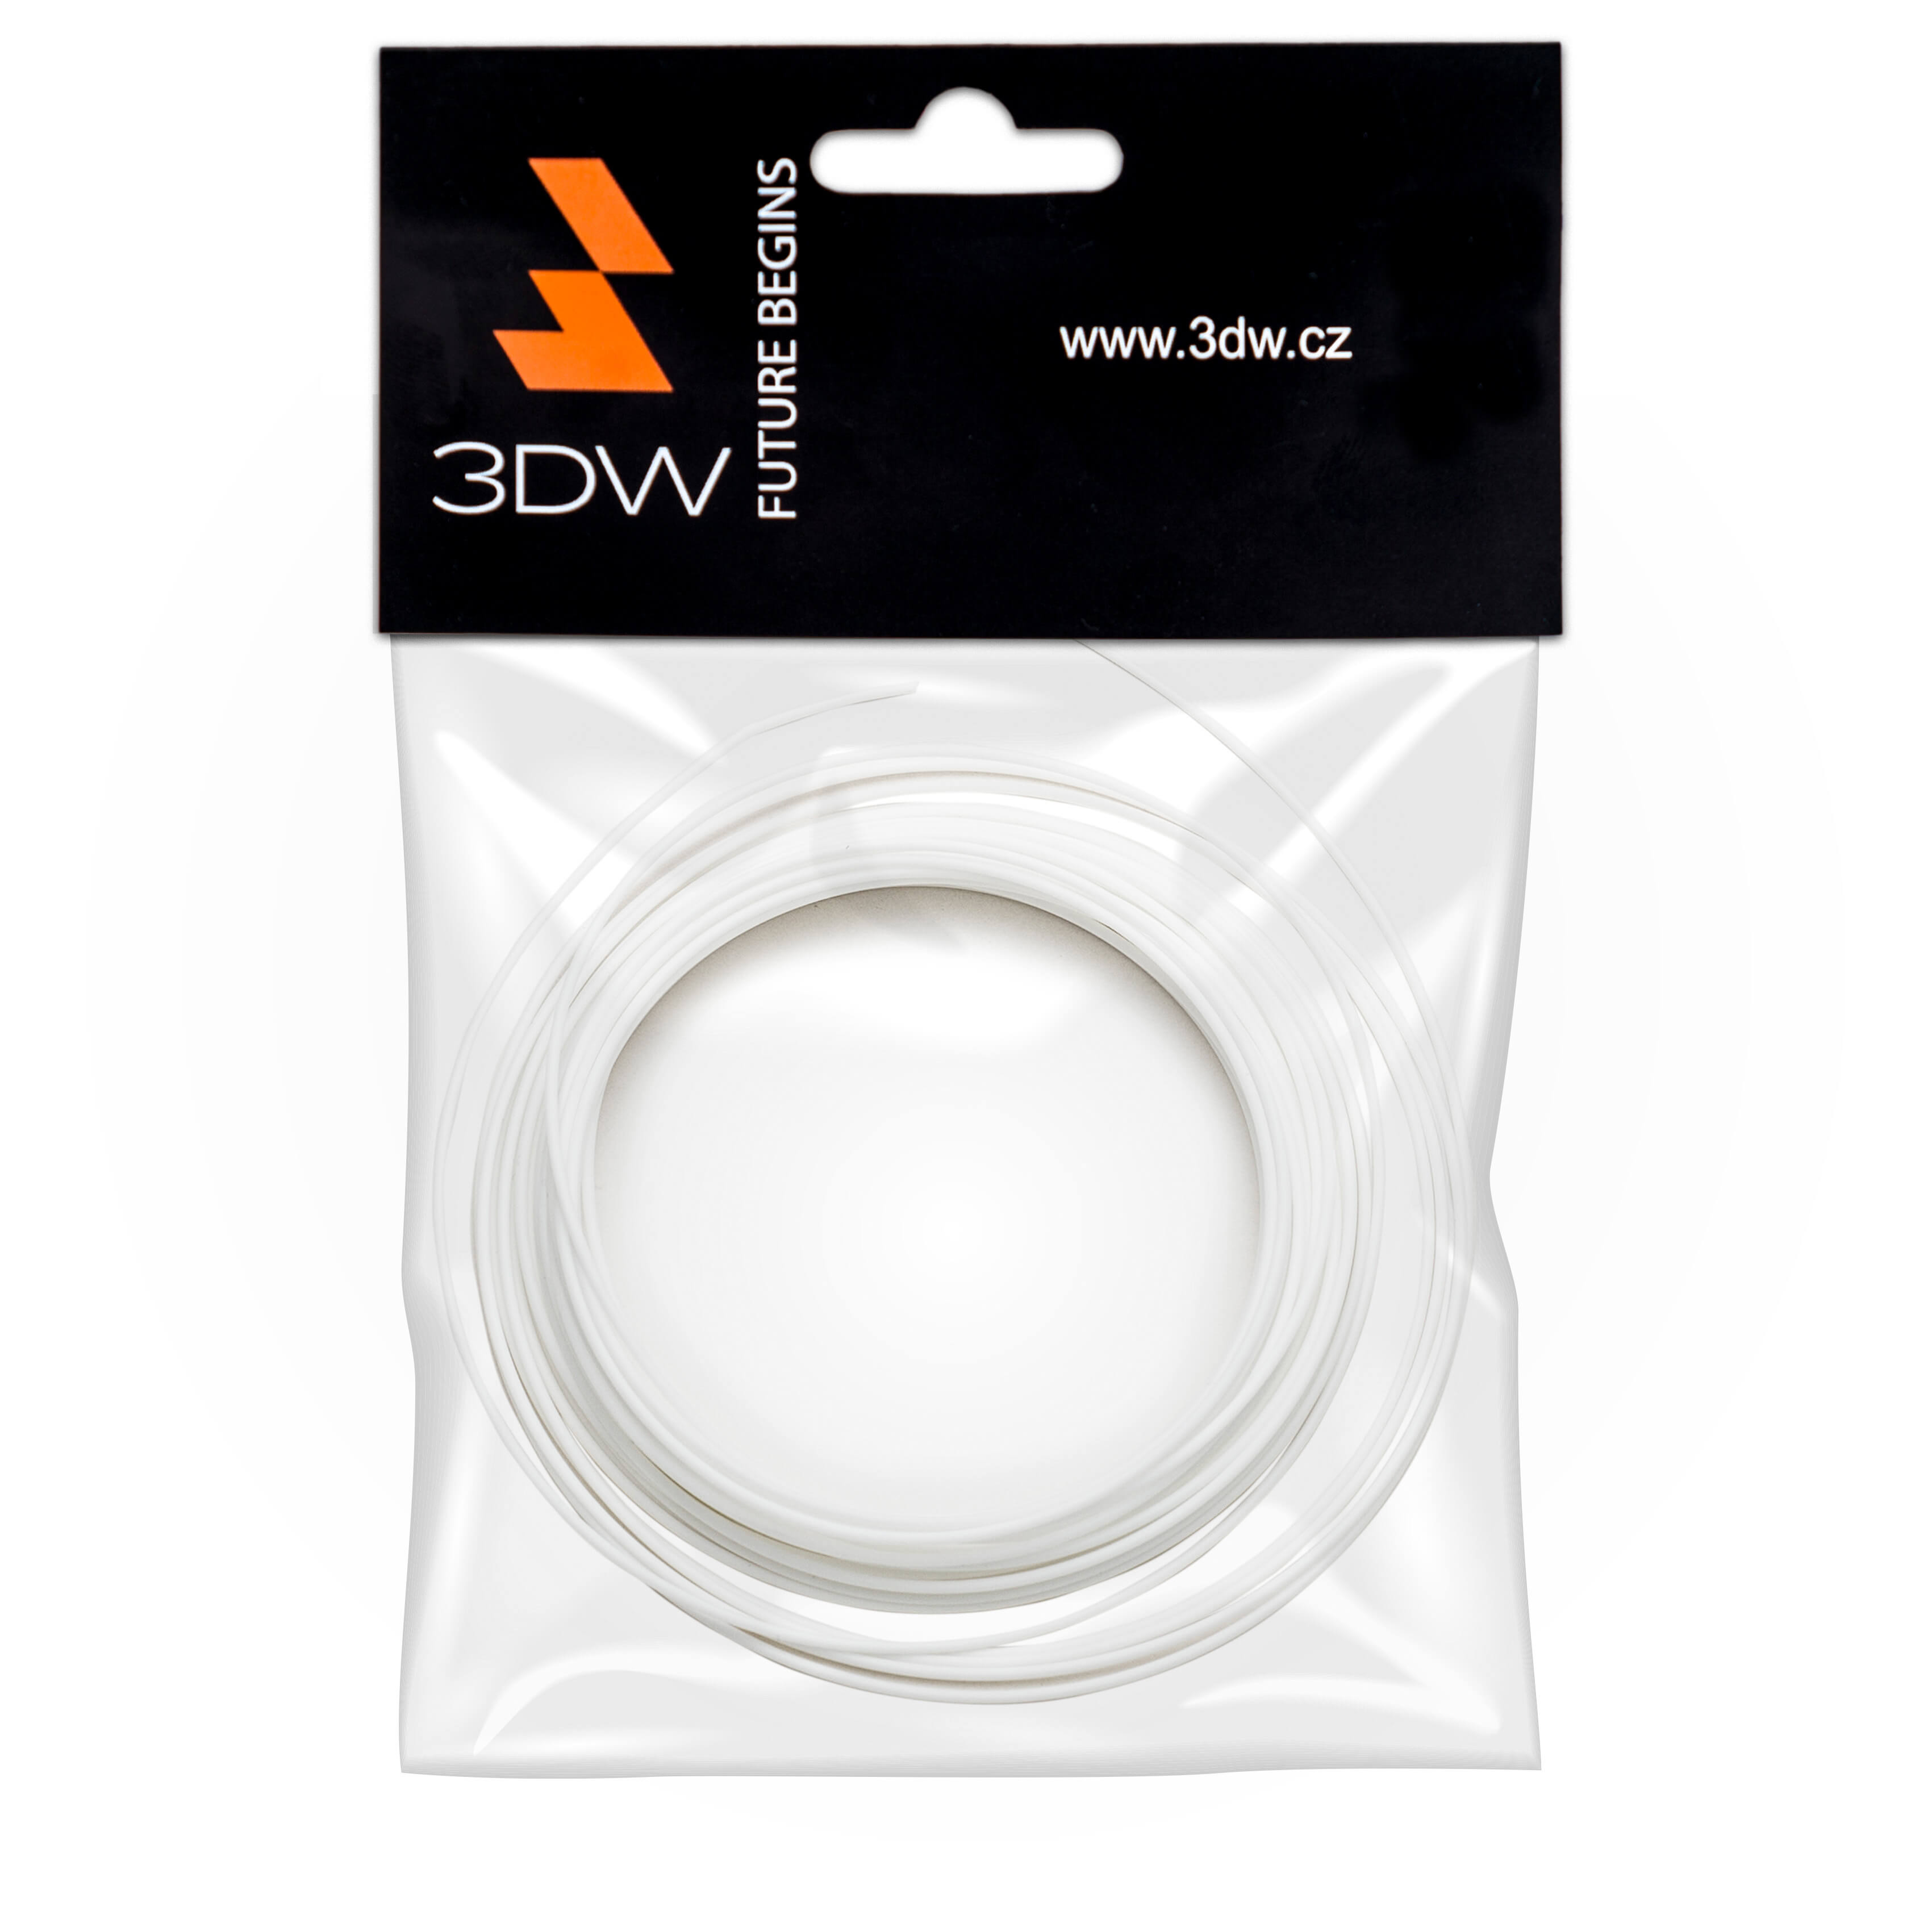 Tisková struna 3DW (filament) ABS, 1,75mm, 10m, bílá, 220-250°C